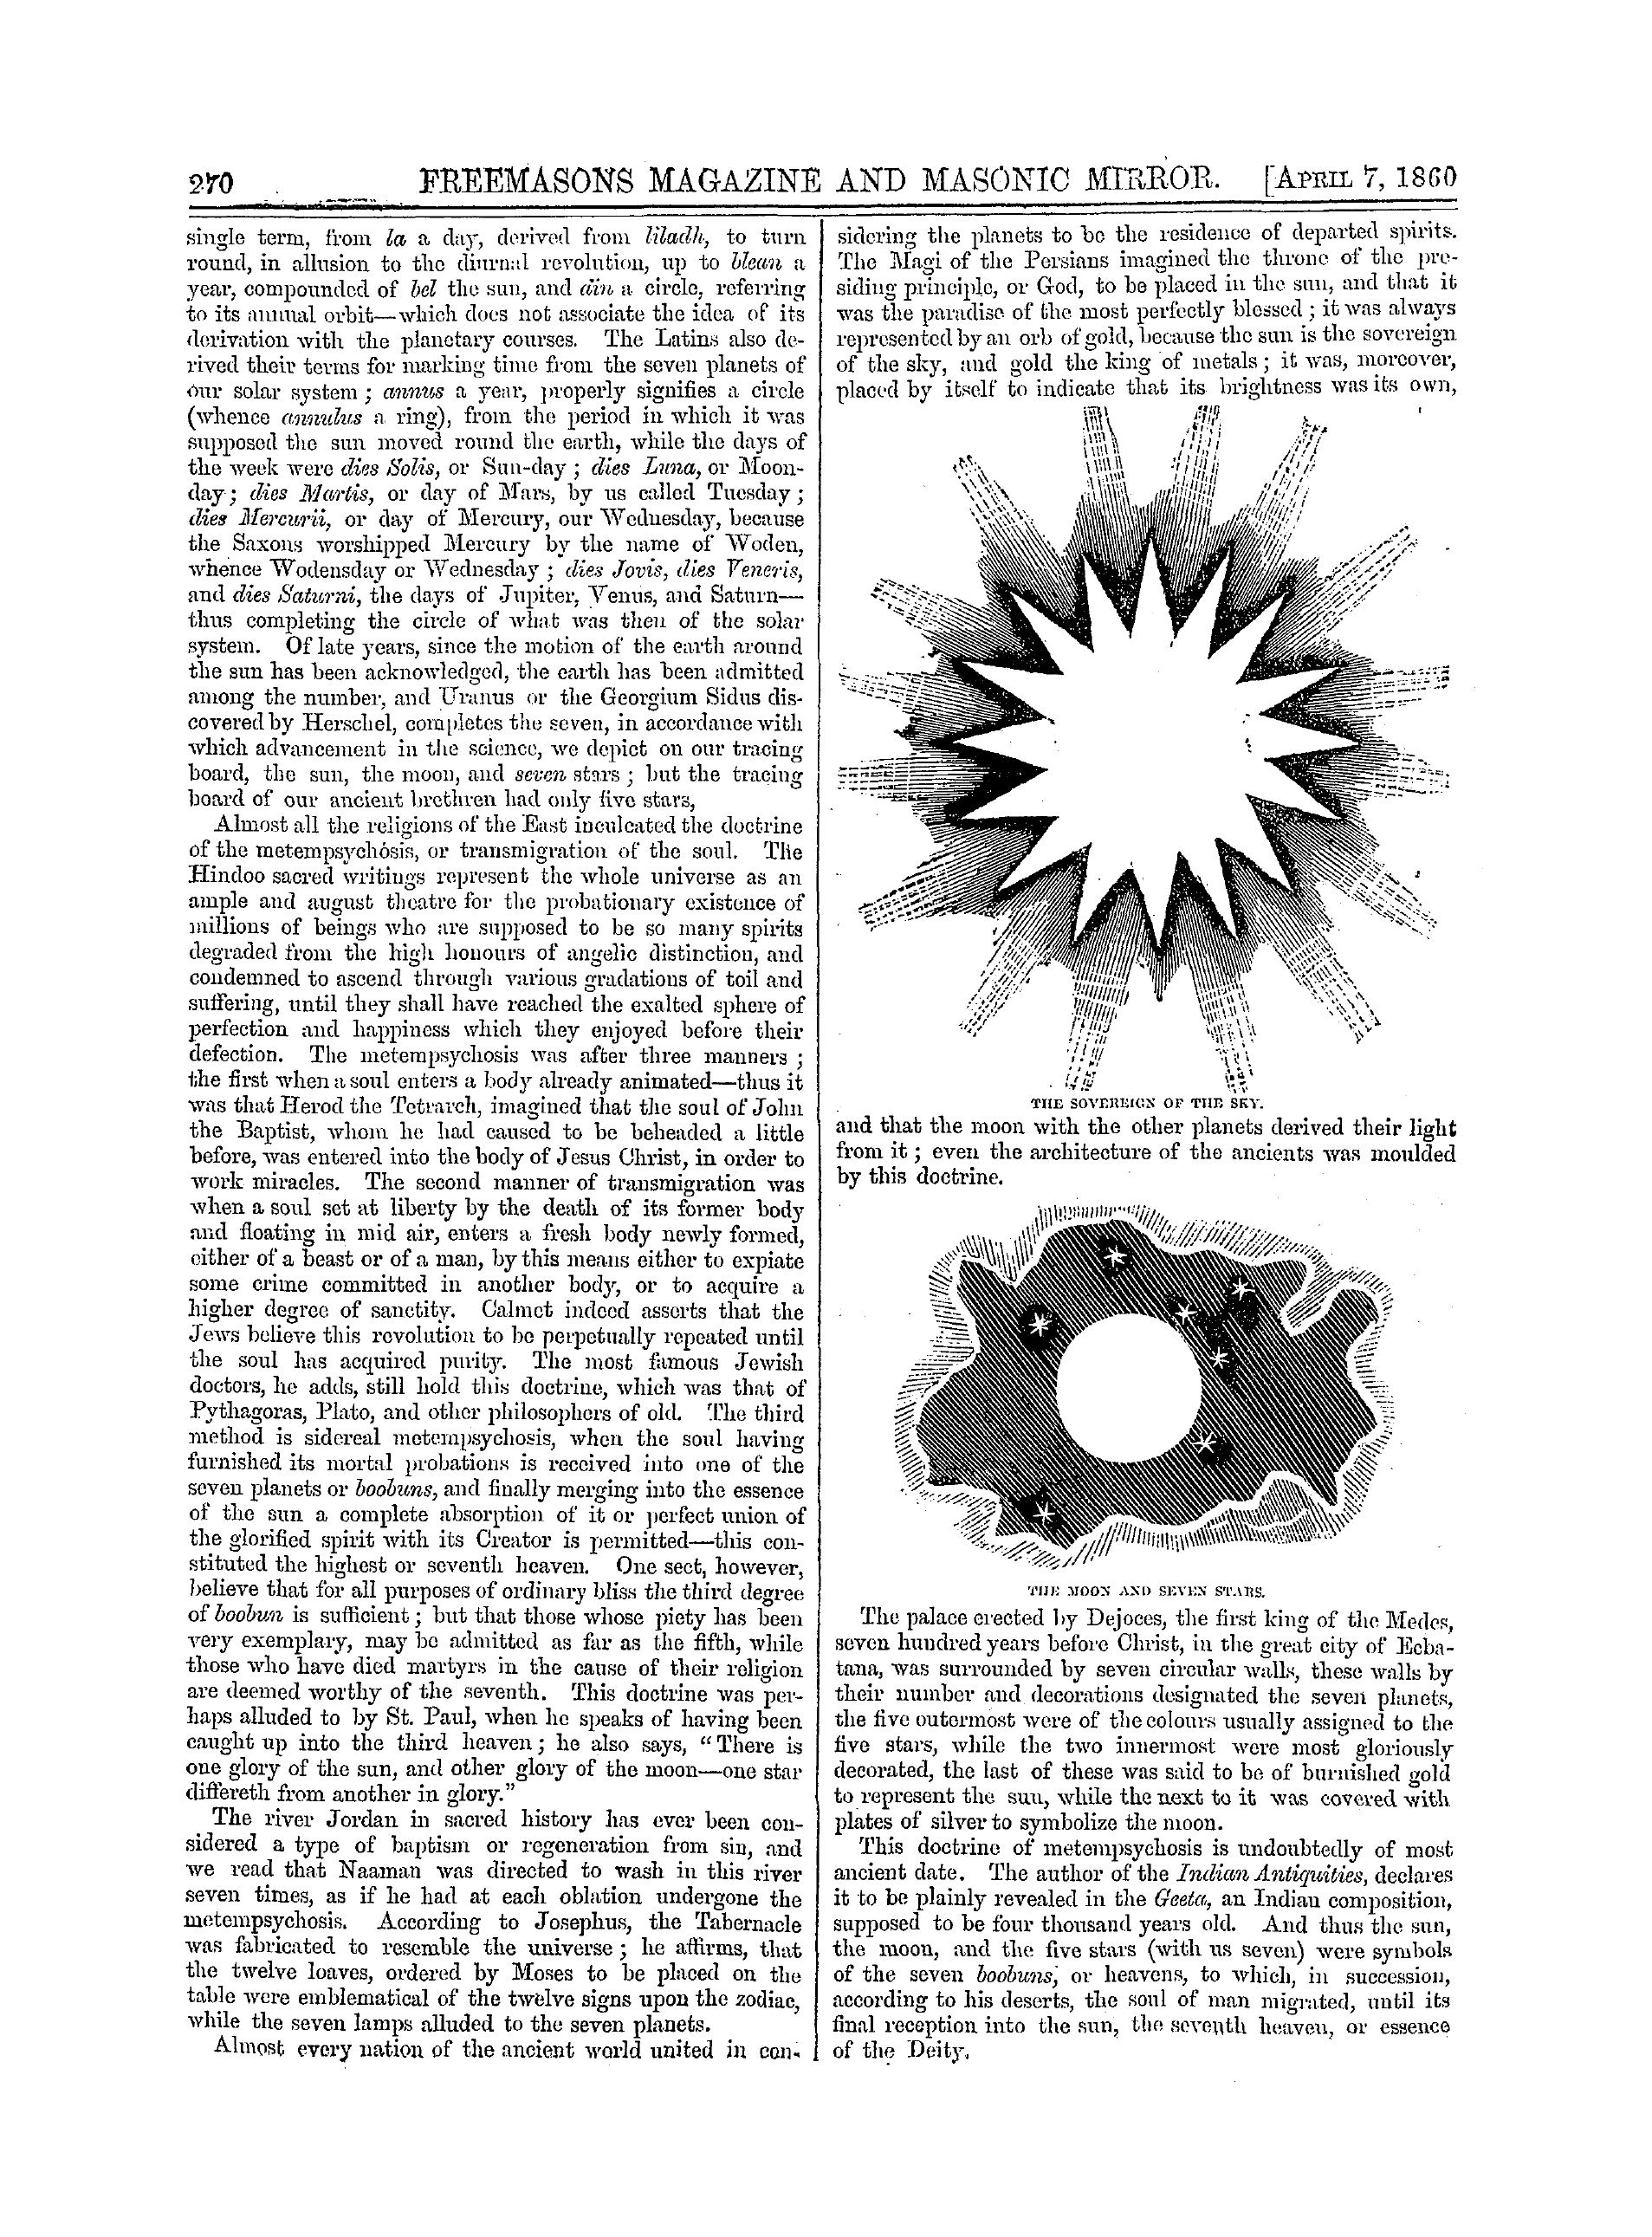 The Freemasons' Monthly Magazine: 1860-04-07 - Ancient Symbolism Illustrated.